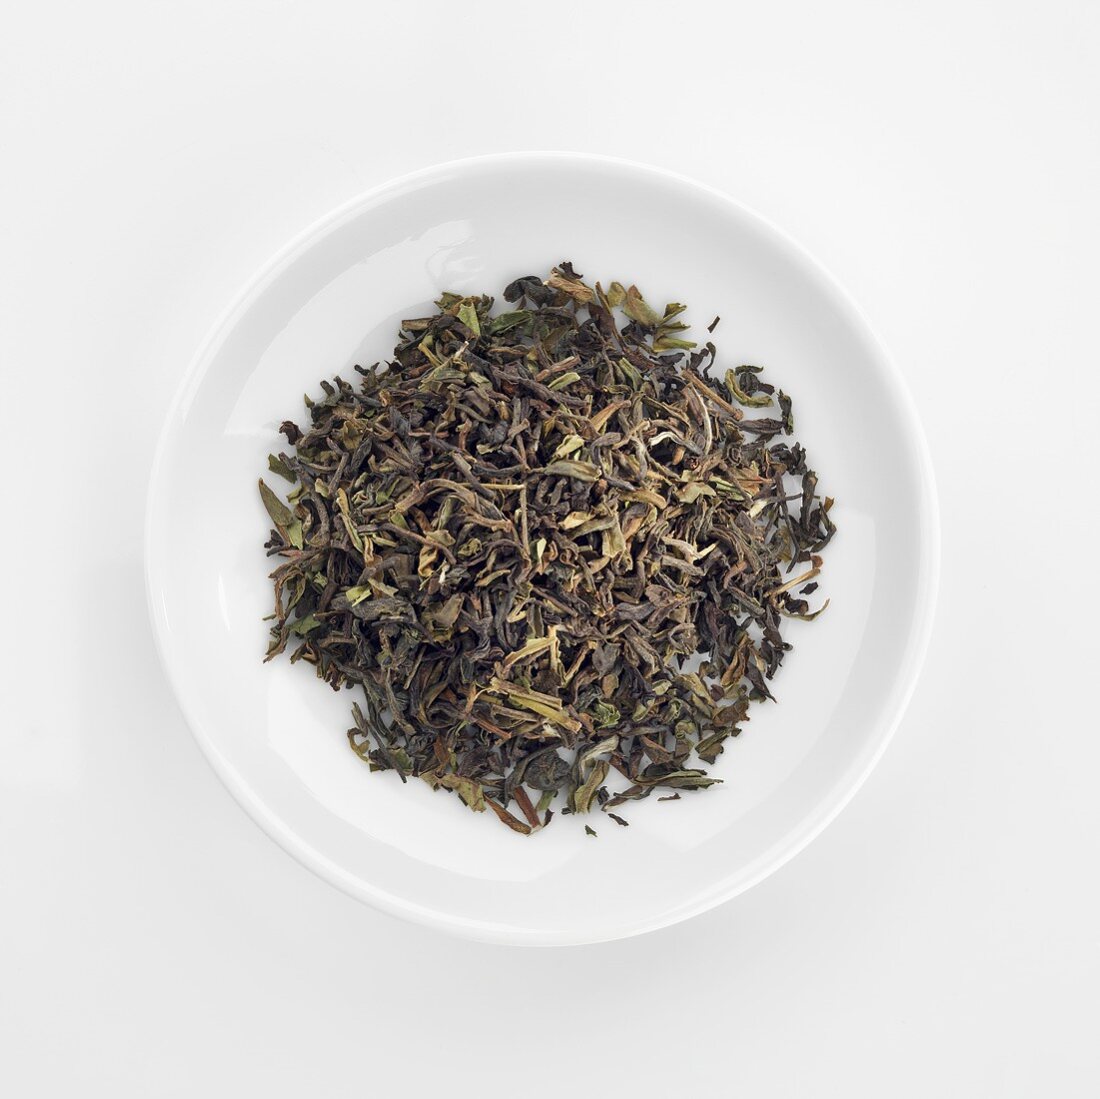 Organic Darjeeling tea leaves in dish (overhead view)